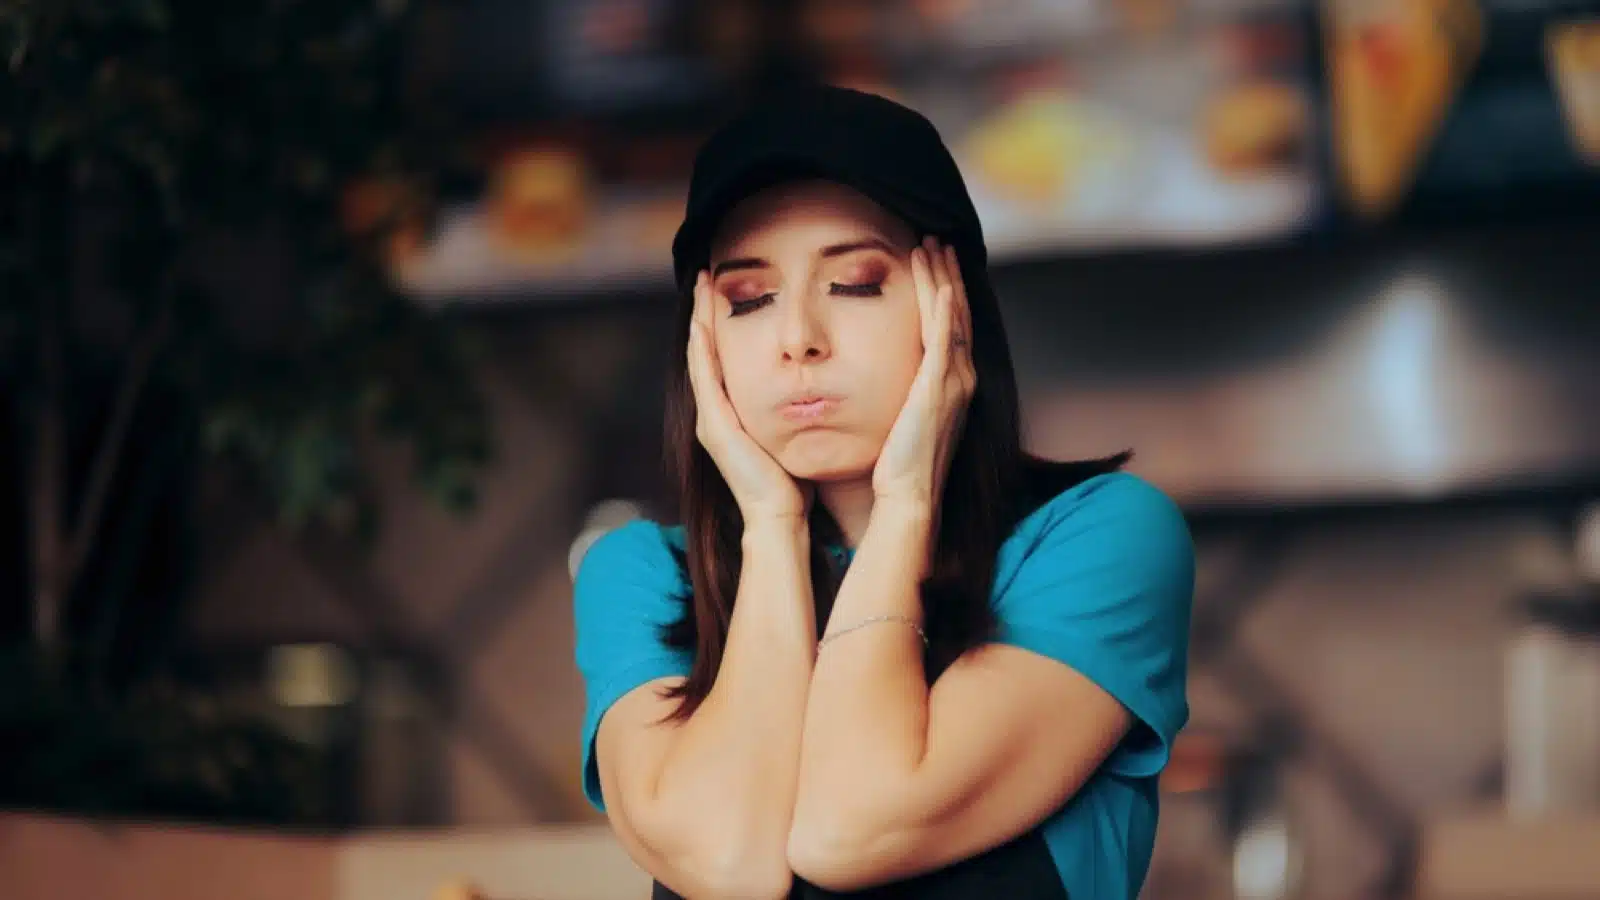 Stressed Fast Food Employee Feeling Desperate